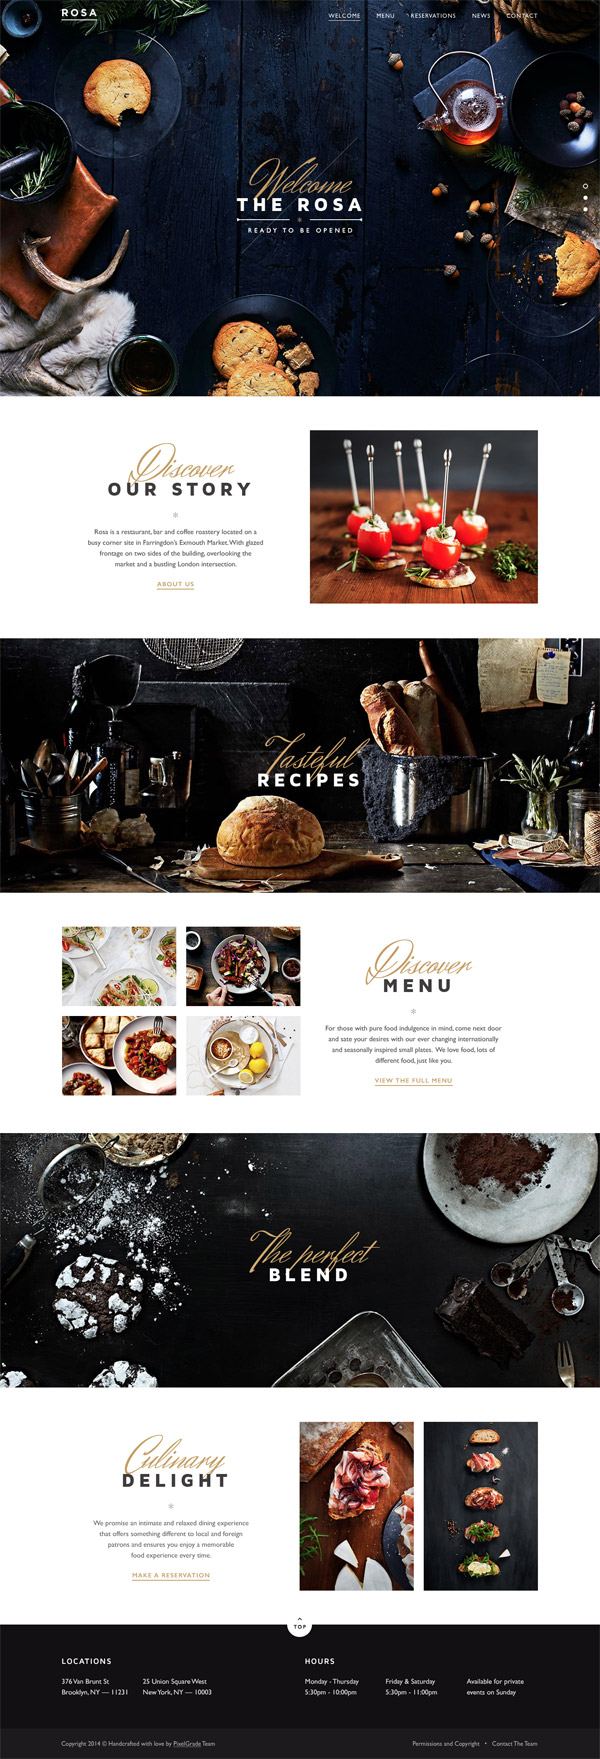 Rosa Restaurant Website by George Olaru